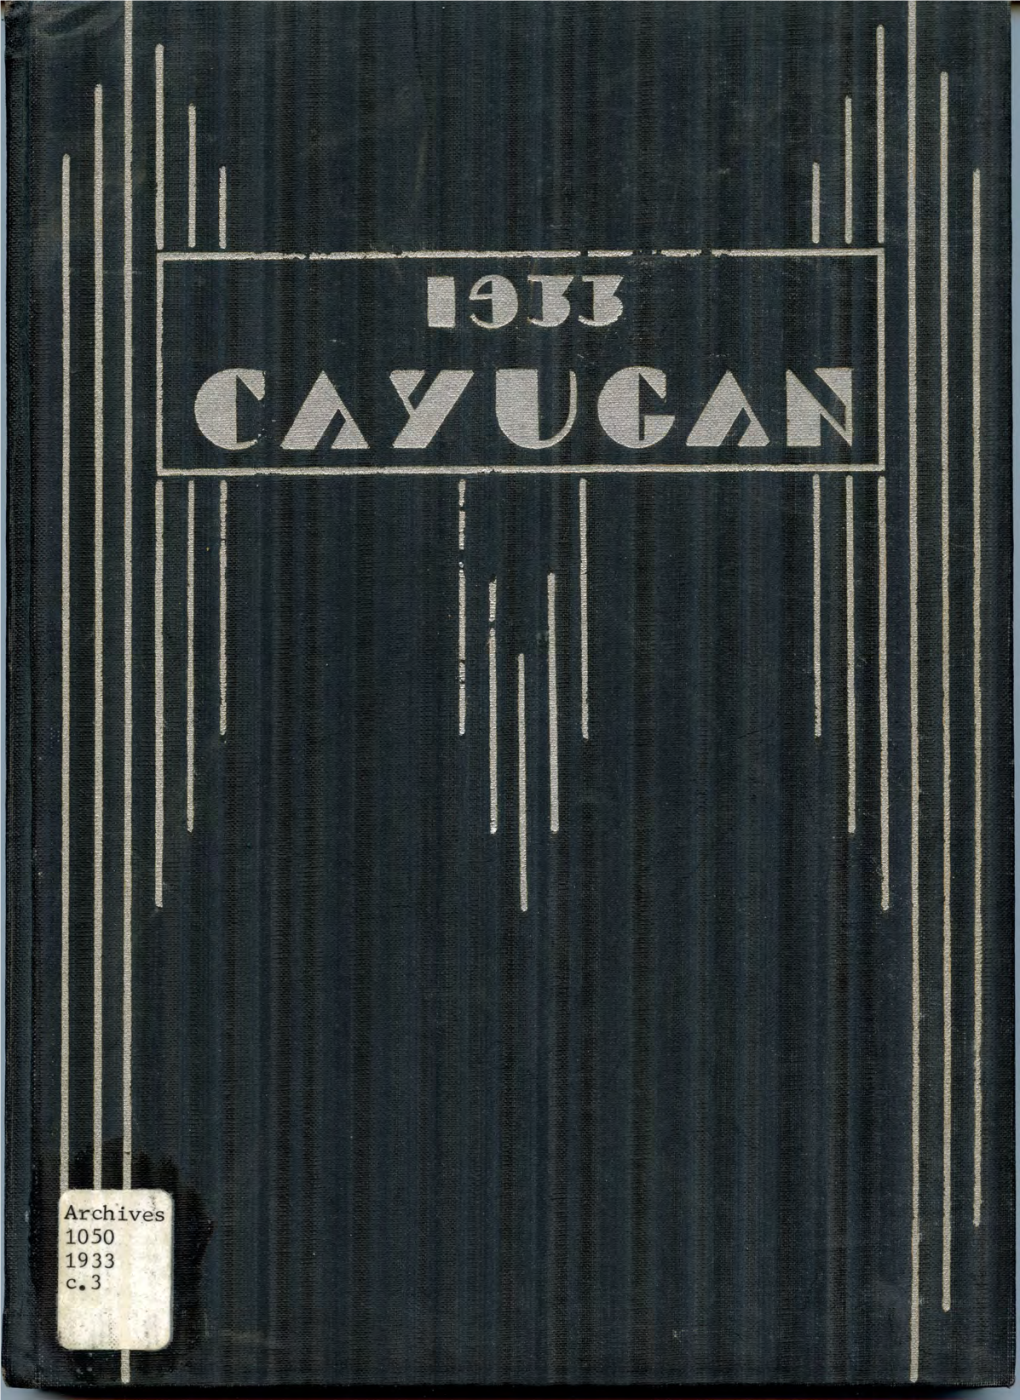 The Cayugan 1933